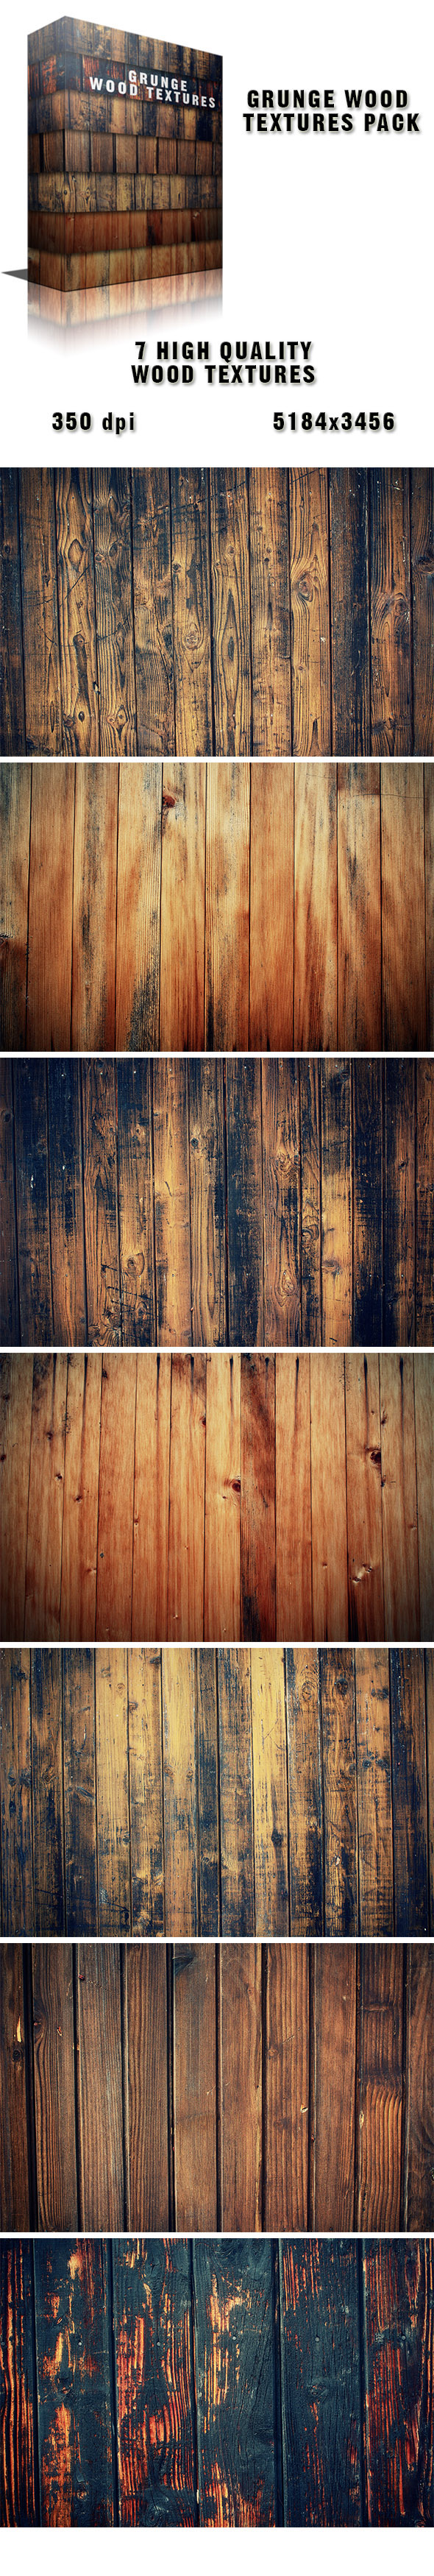 grunge wood texture Web design background wallpaper art